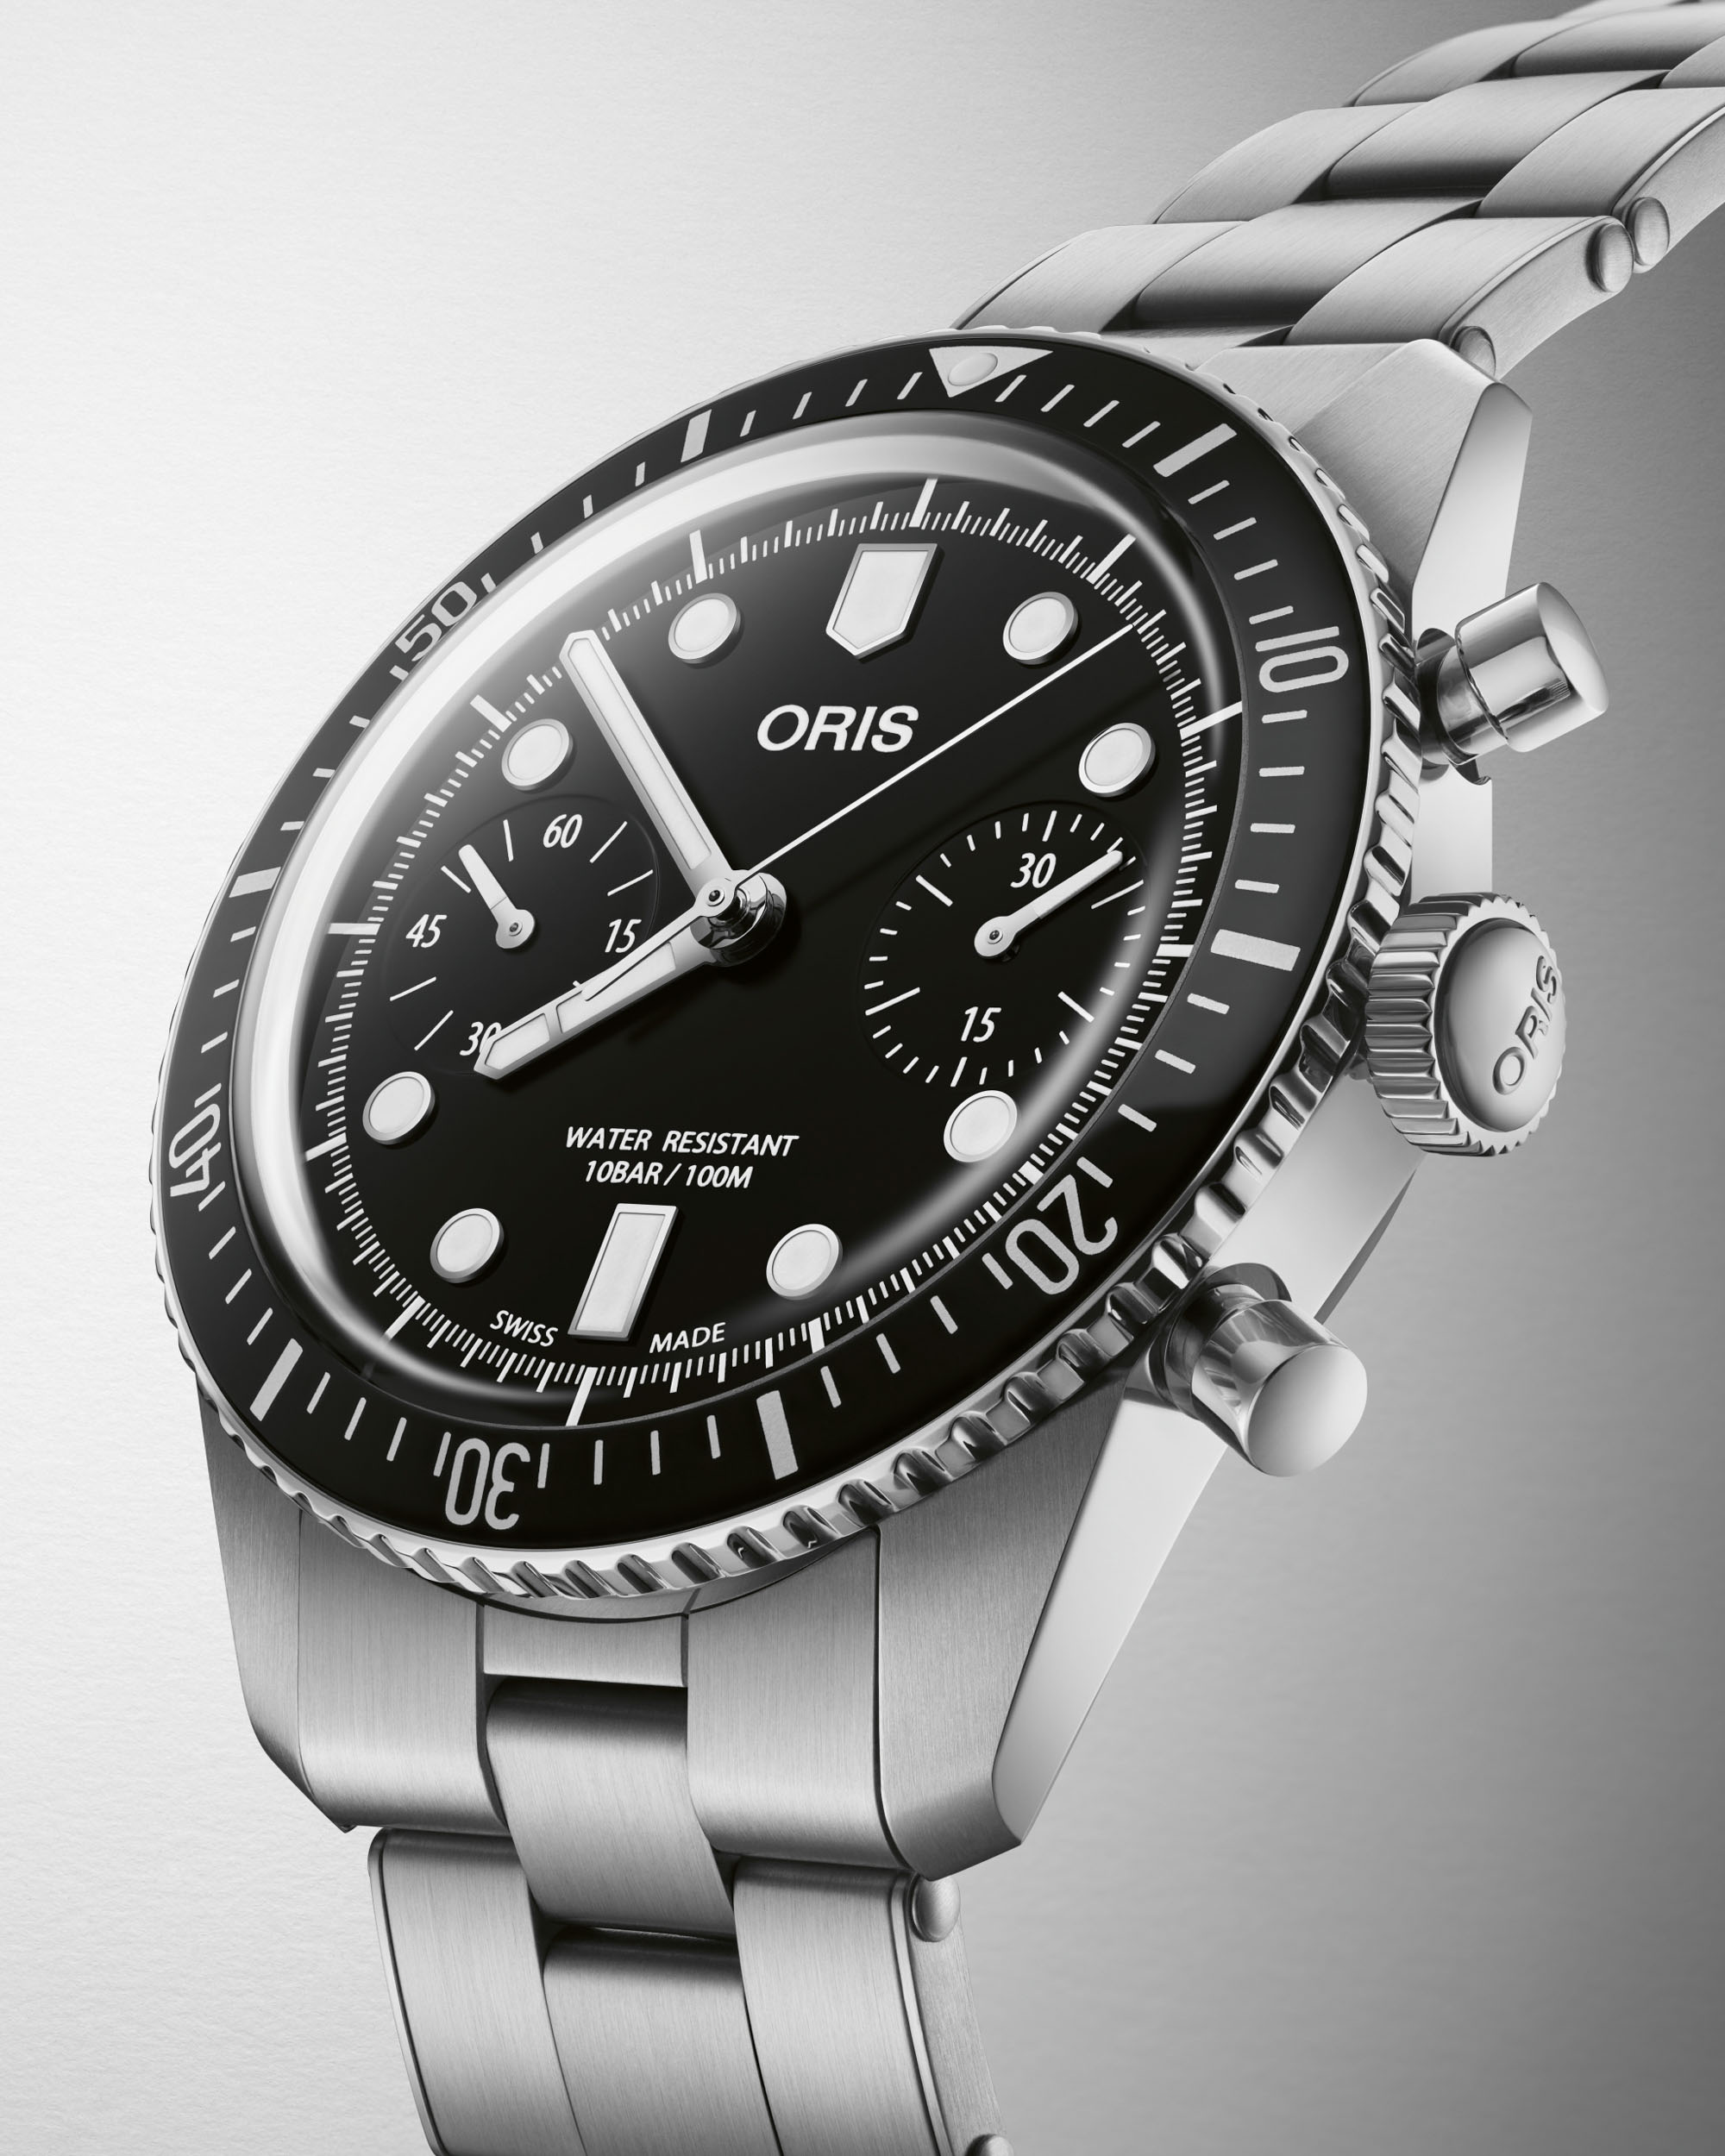 Откройте для себя потрясающий хронограф Oris Divers Sixty Five 40 мм!